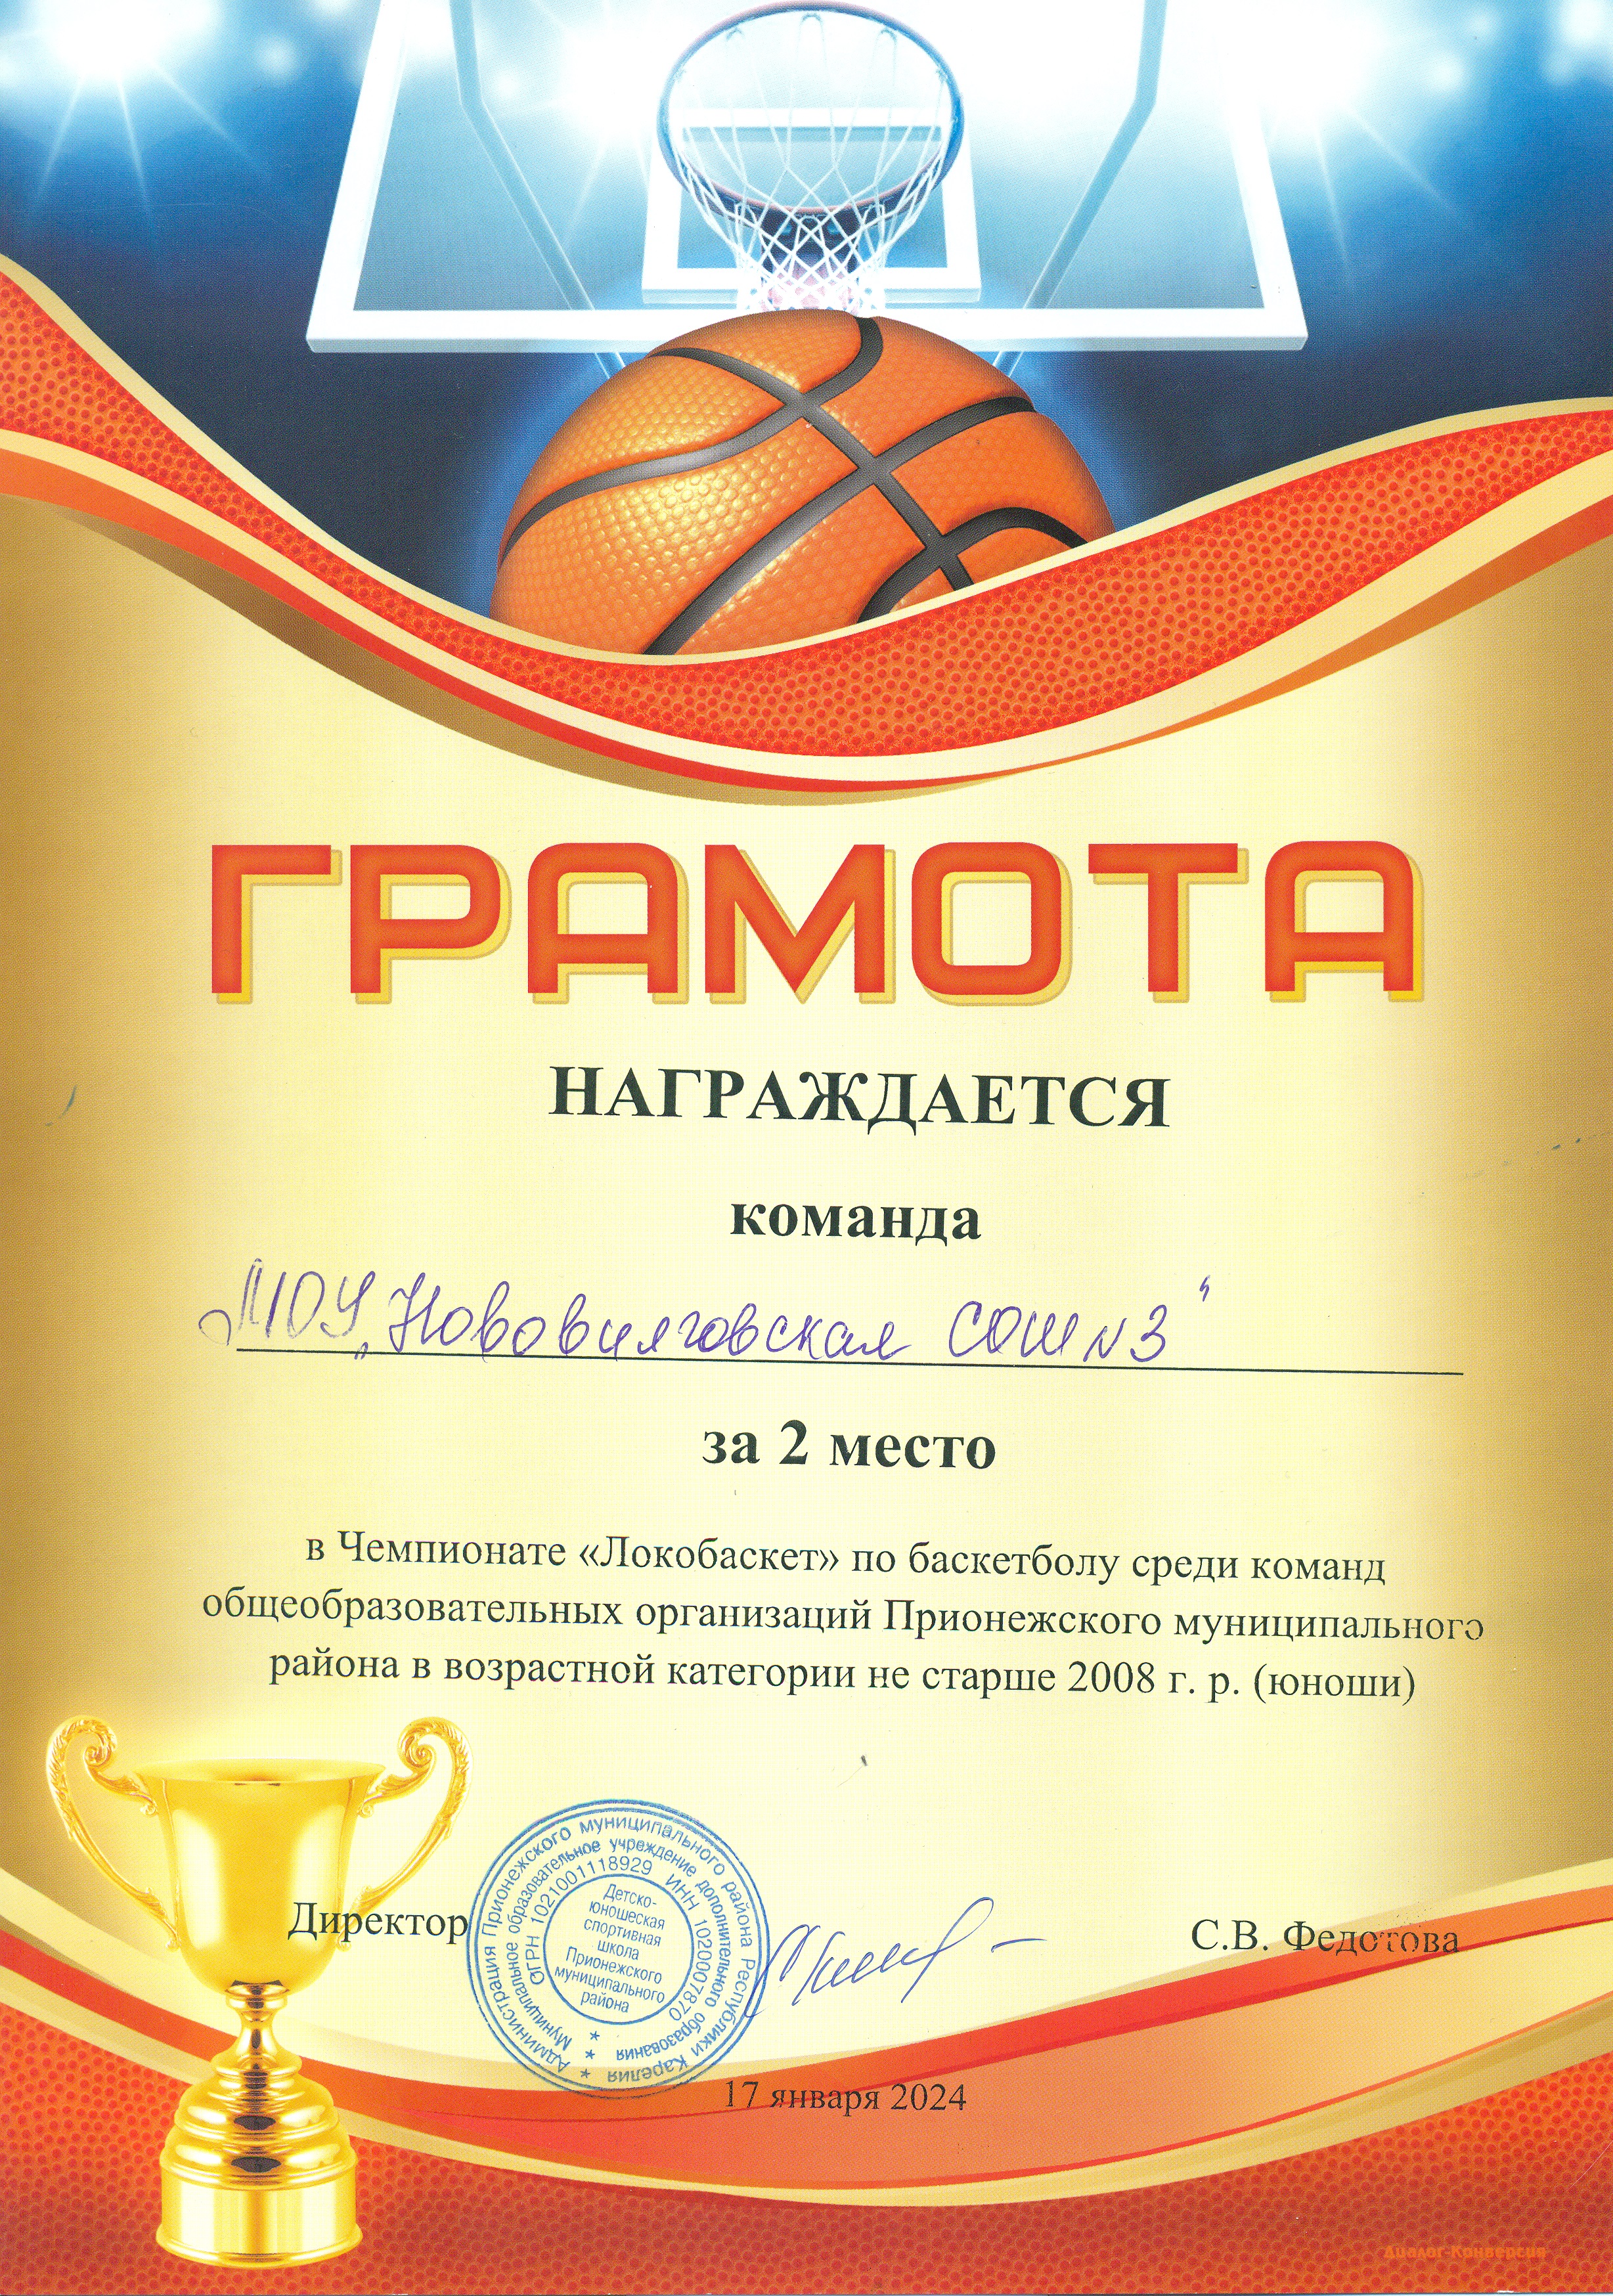 2 место в Чемпионате "Локобаскет" по баскетболу